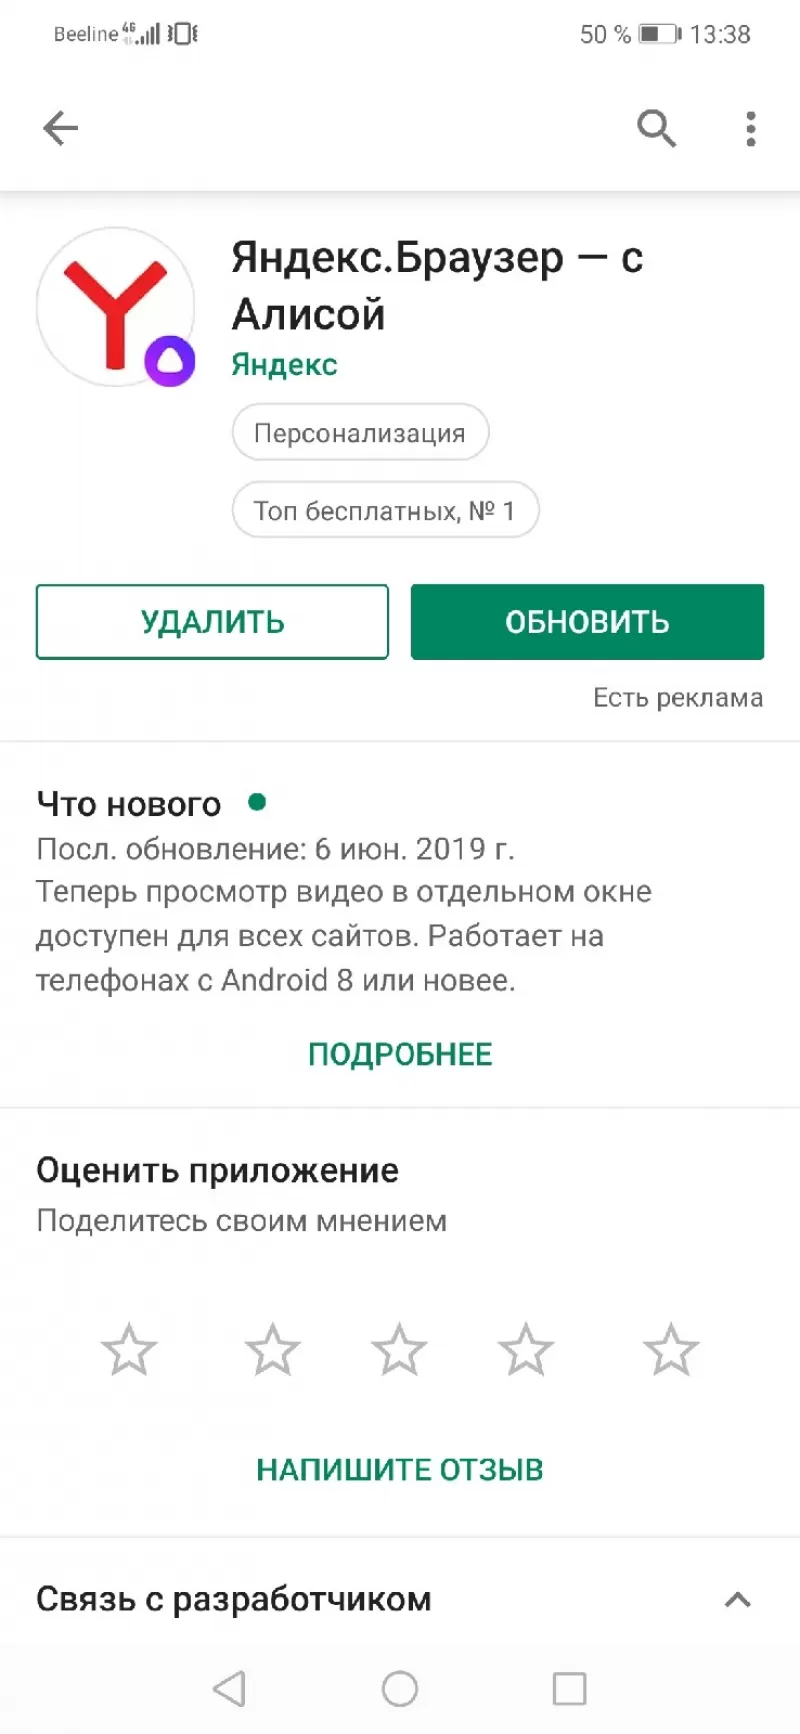 Как удалить Алису Яндекс с телефона Андроид